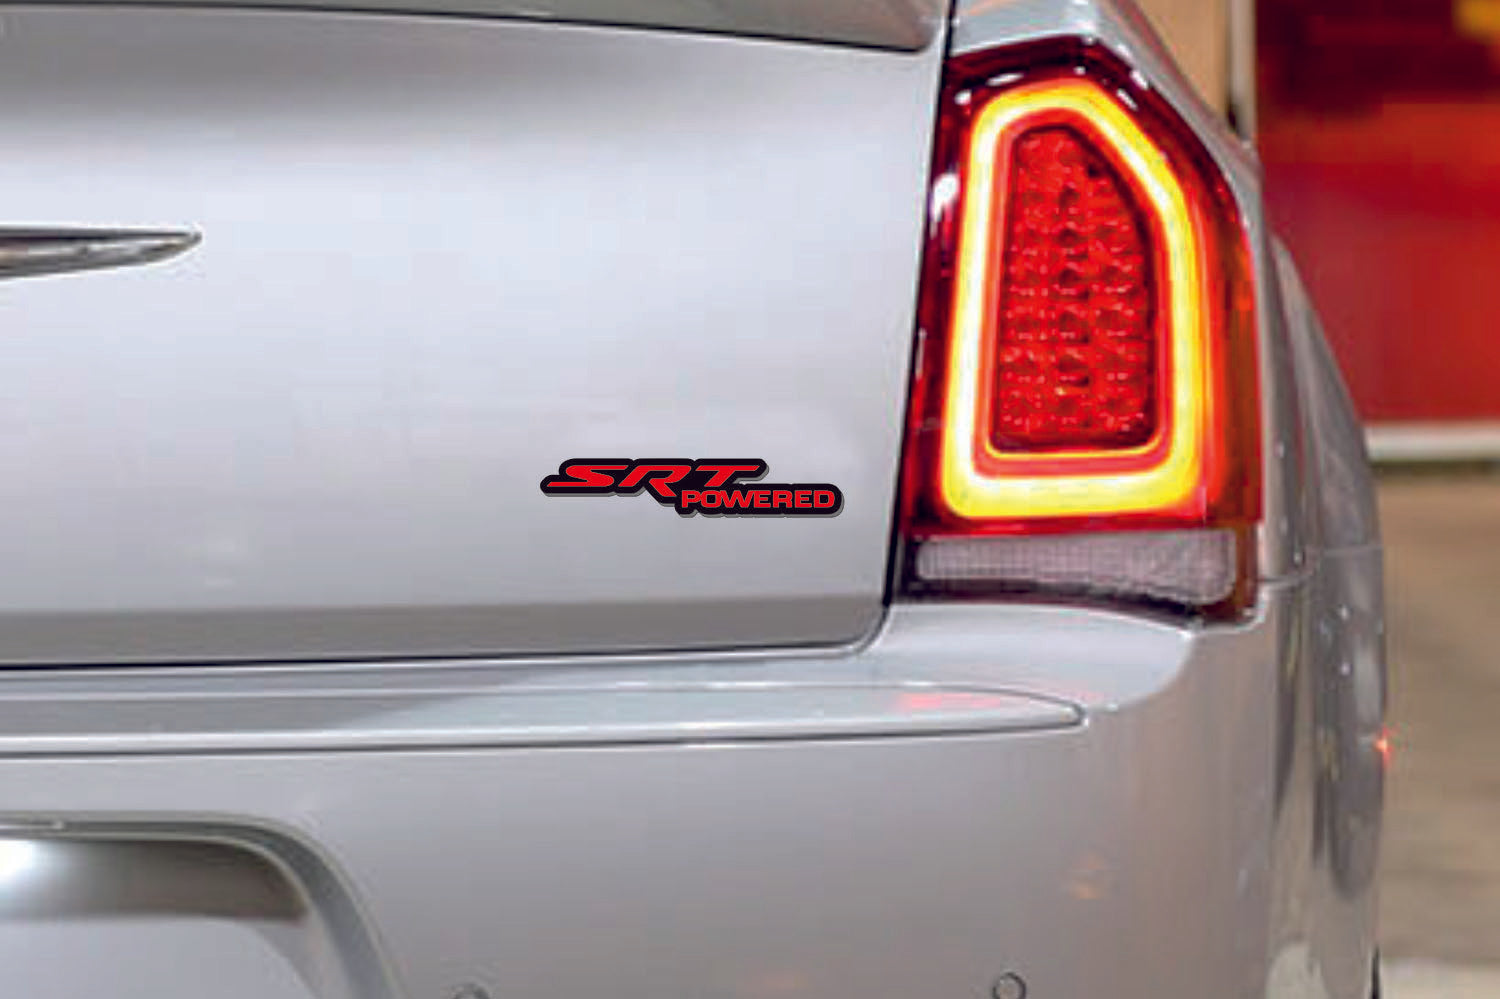 Chrysler tailgate trunk rear emblem with SRT Powered logo - decoinfabric